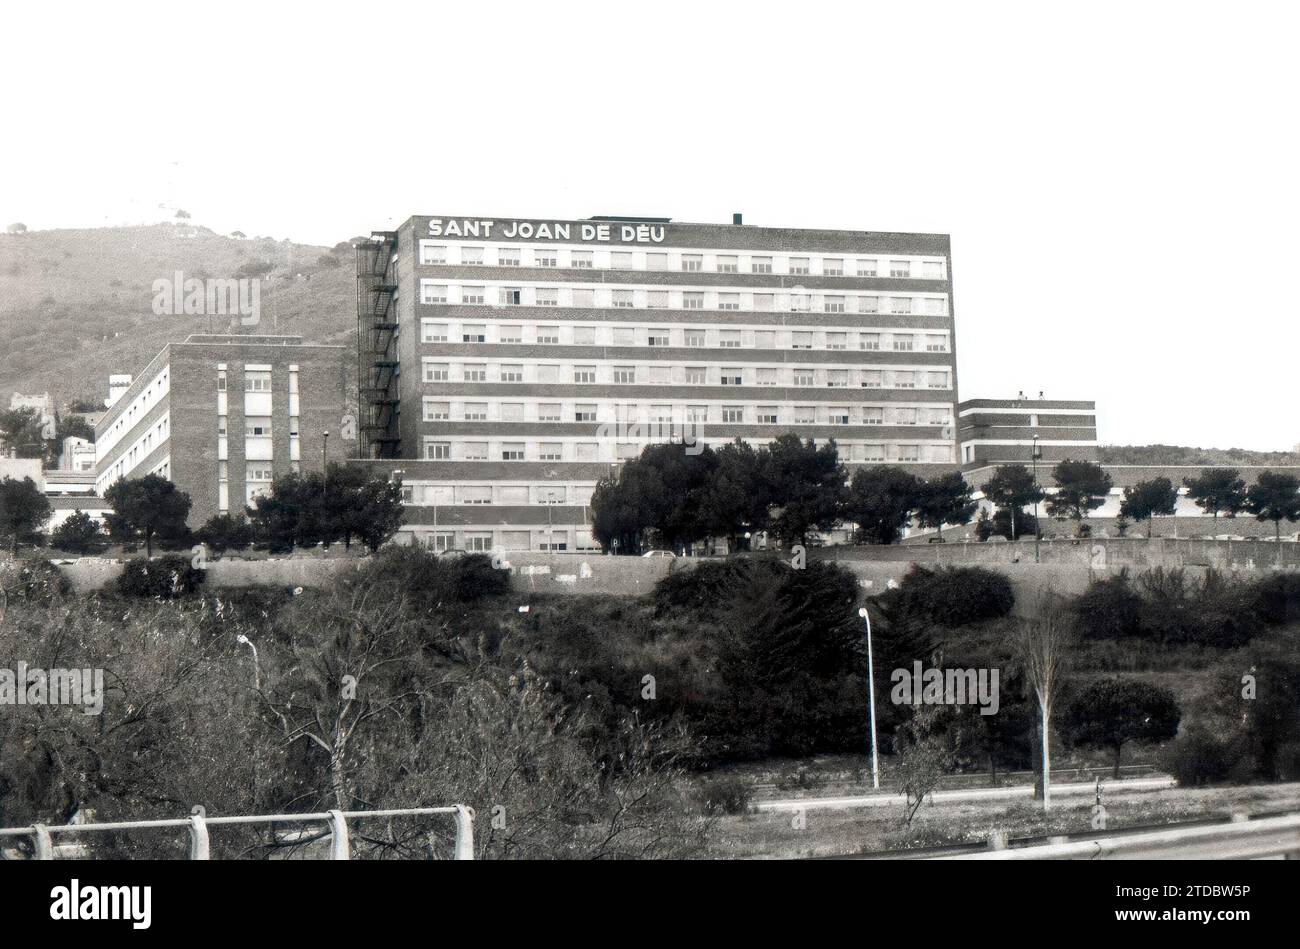 Barcelona.......... Fassade des Krankenhauses Sant Joan de Deu...... Foto von Jordi Romeu vom 24 01 01 1993......... Archdc. Quelle: Album / Archivo ABC / Jordi Romeu Stockfoto